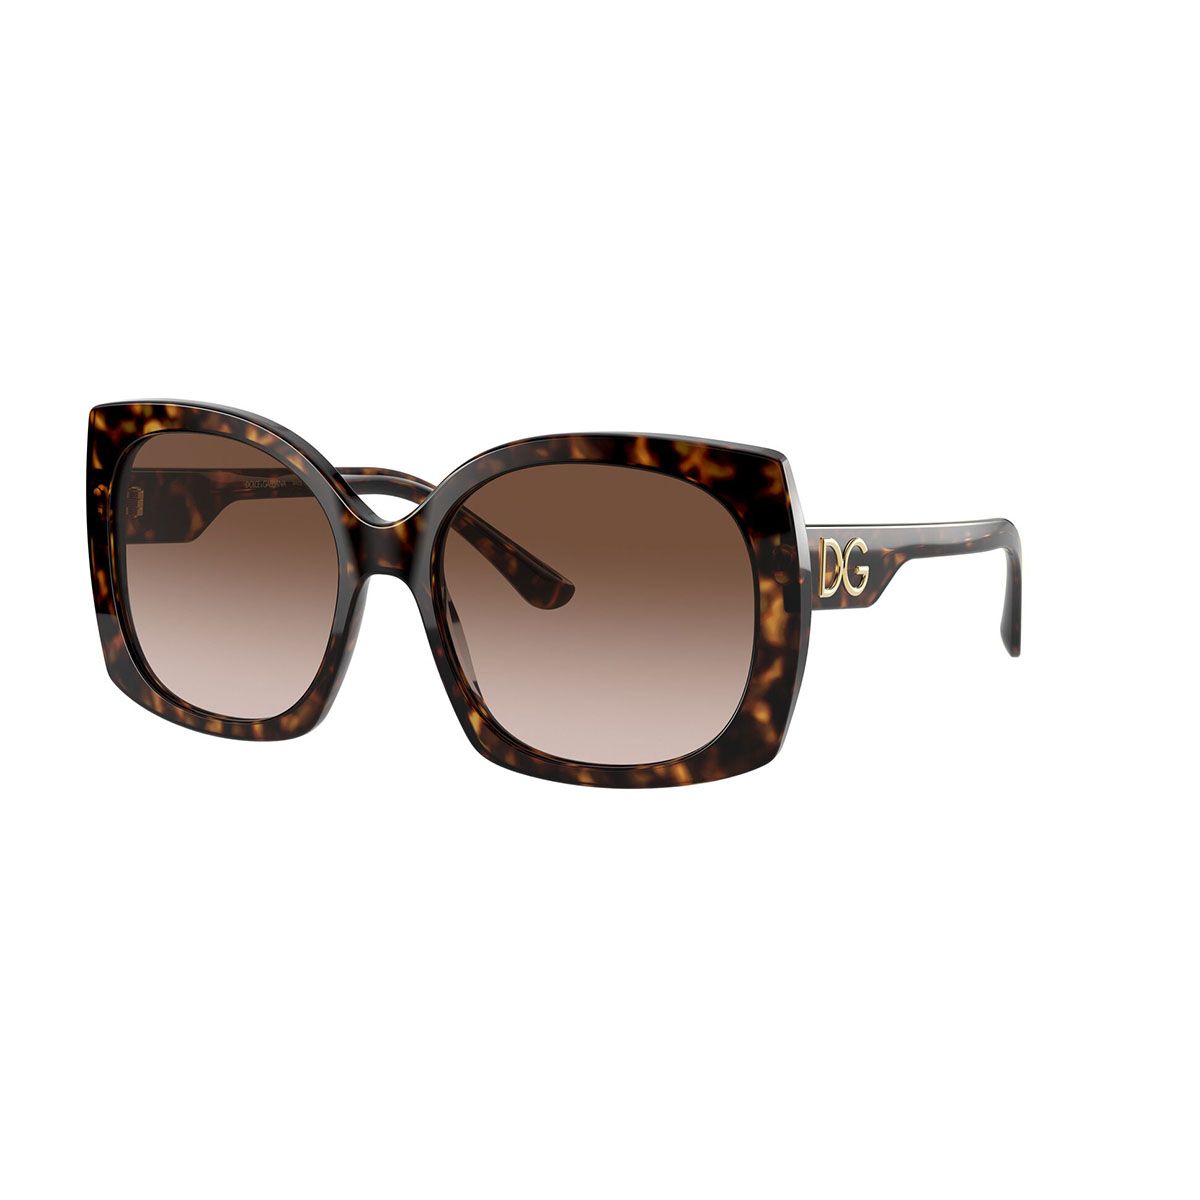 DG4385 Square Sunglasses 502 13 - size 58